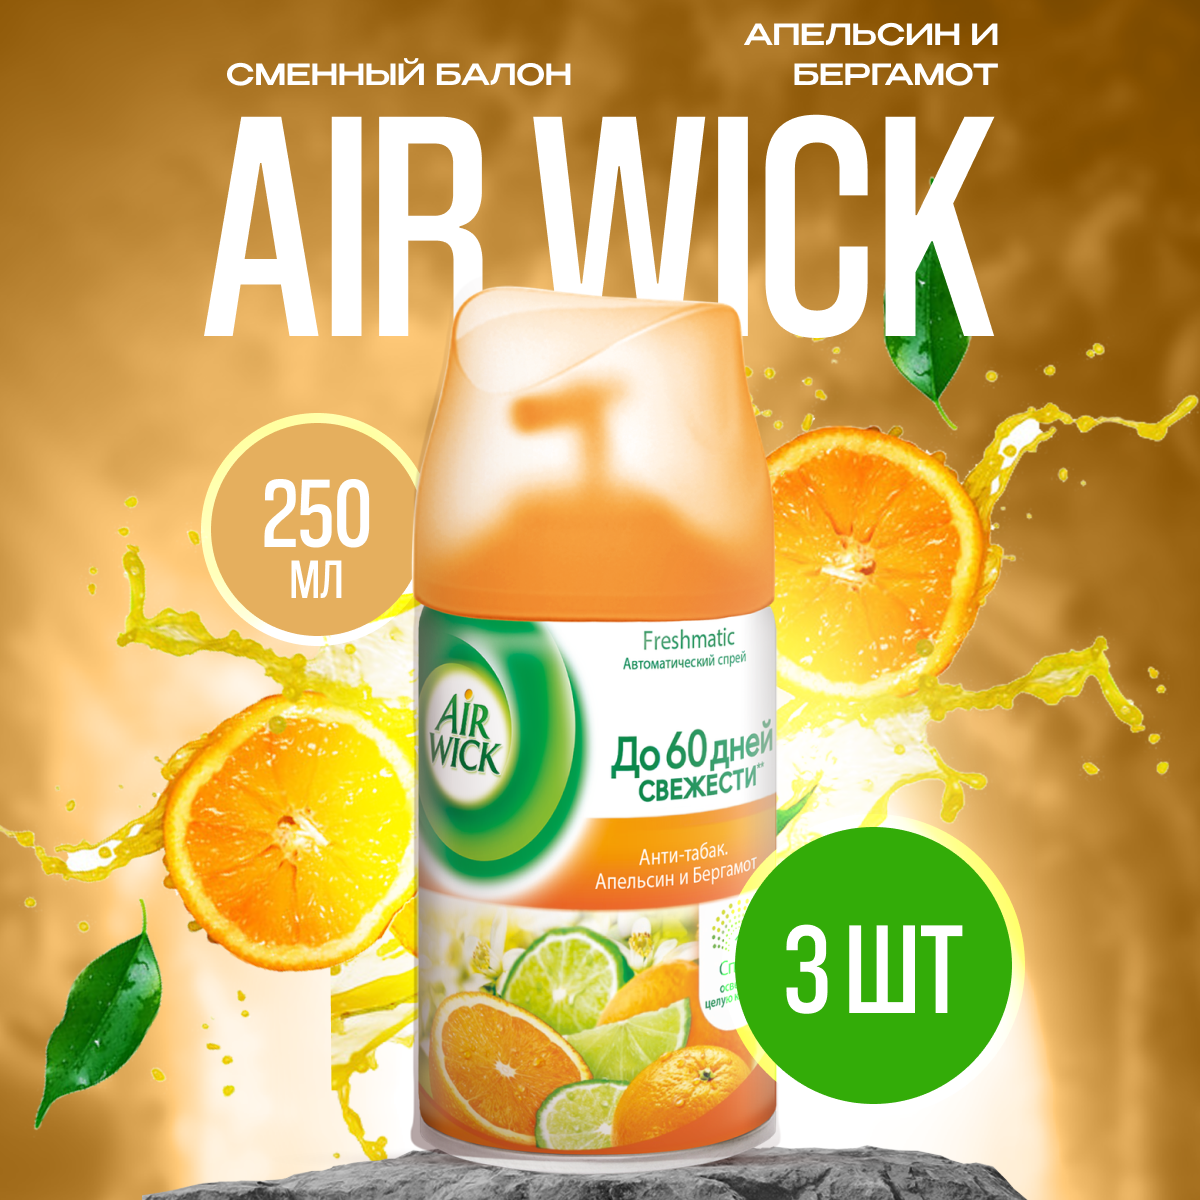 Air Wick сменный баллон Антитабак, апельсин и бергамот, 250 мл, ,